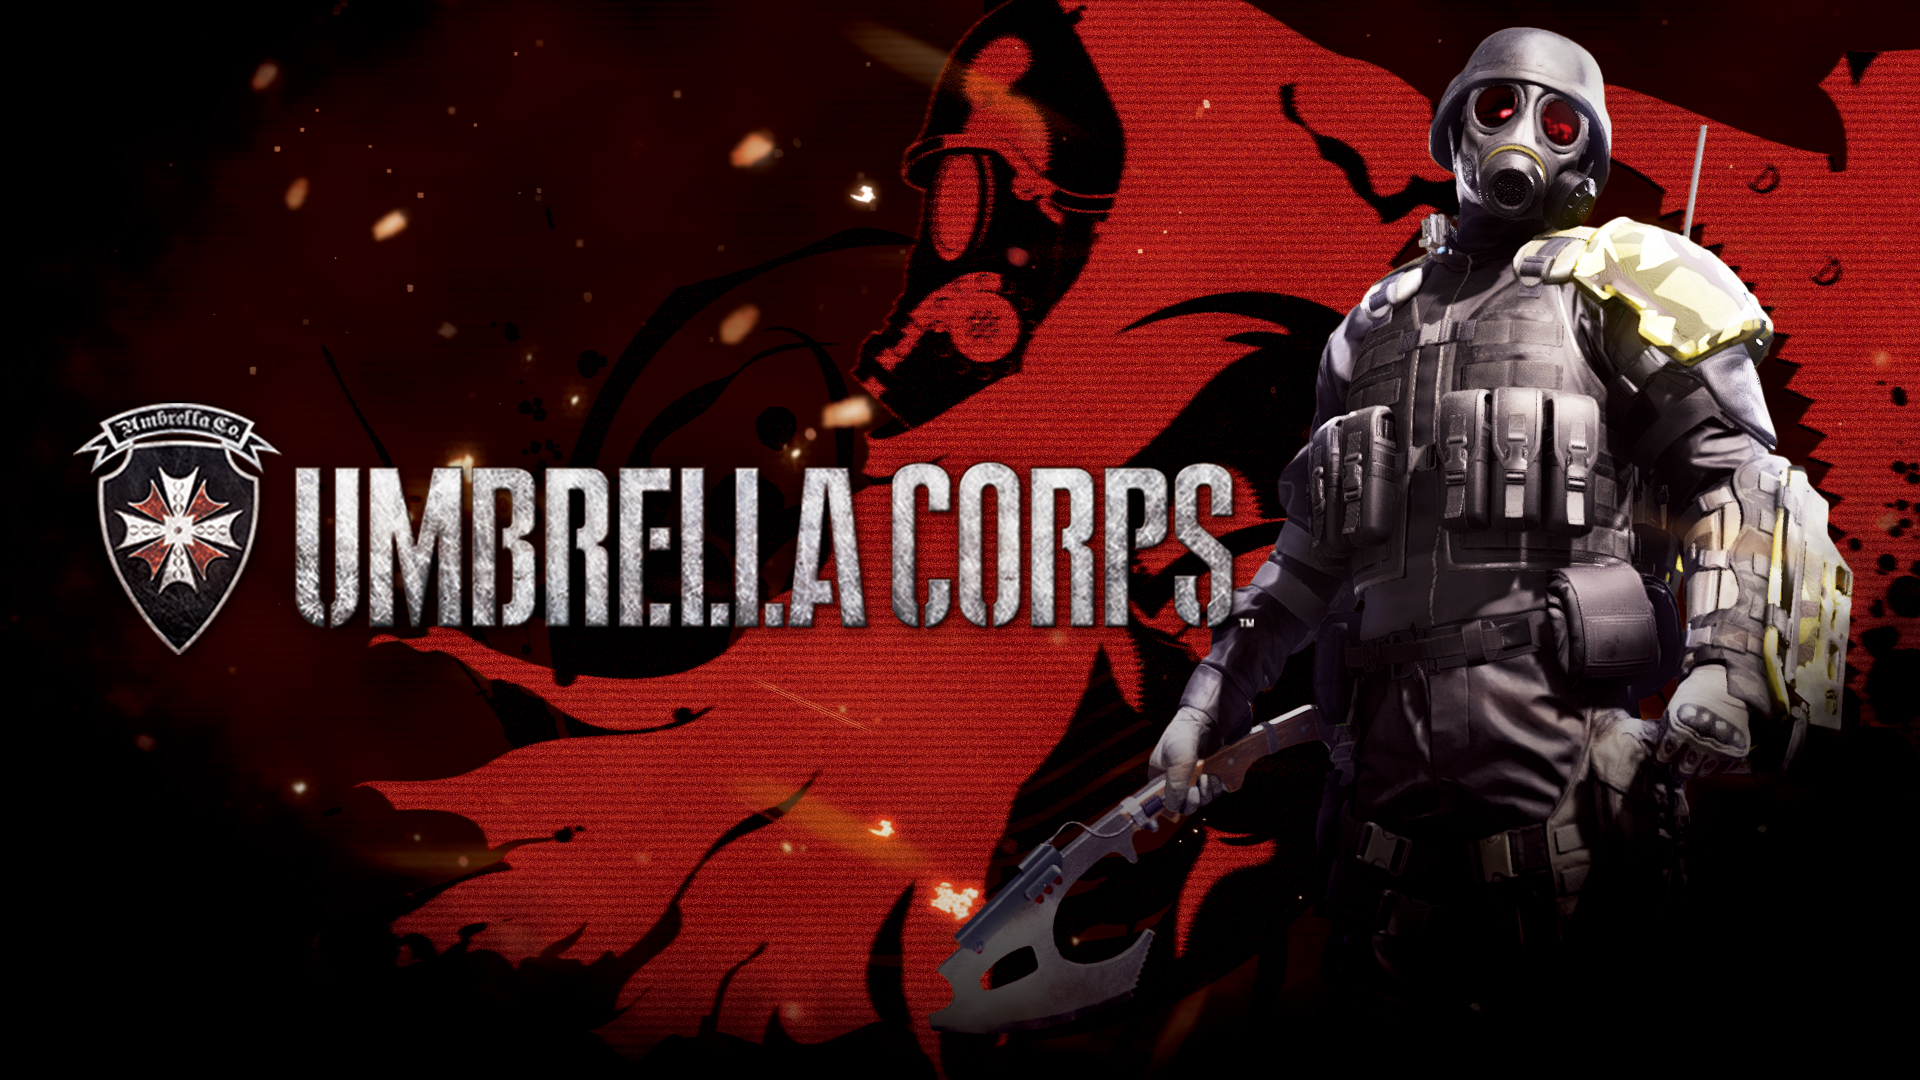 Capcom trademarks Resident Evil: Umbrella Corps